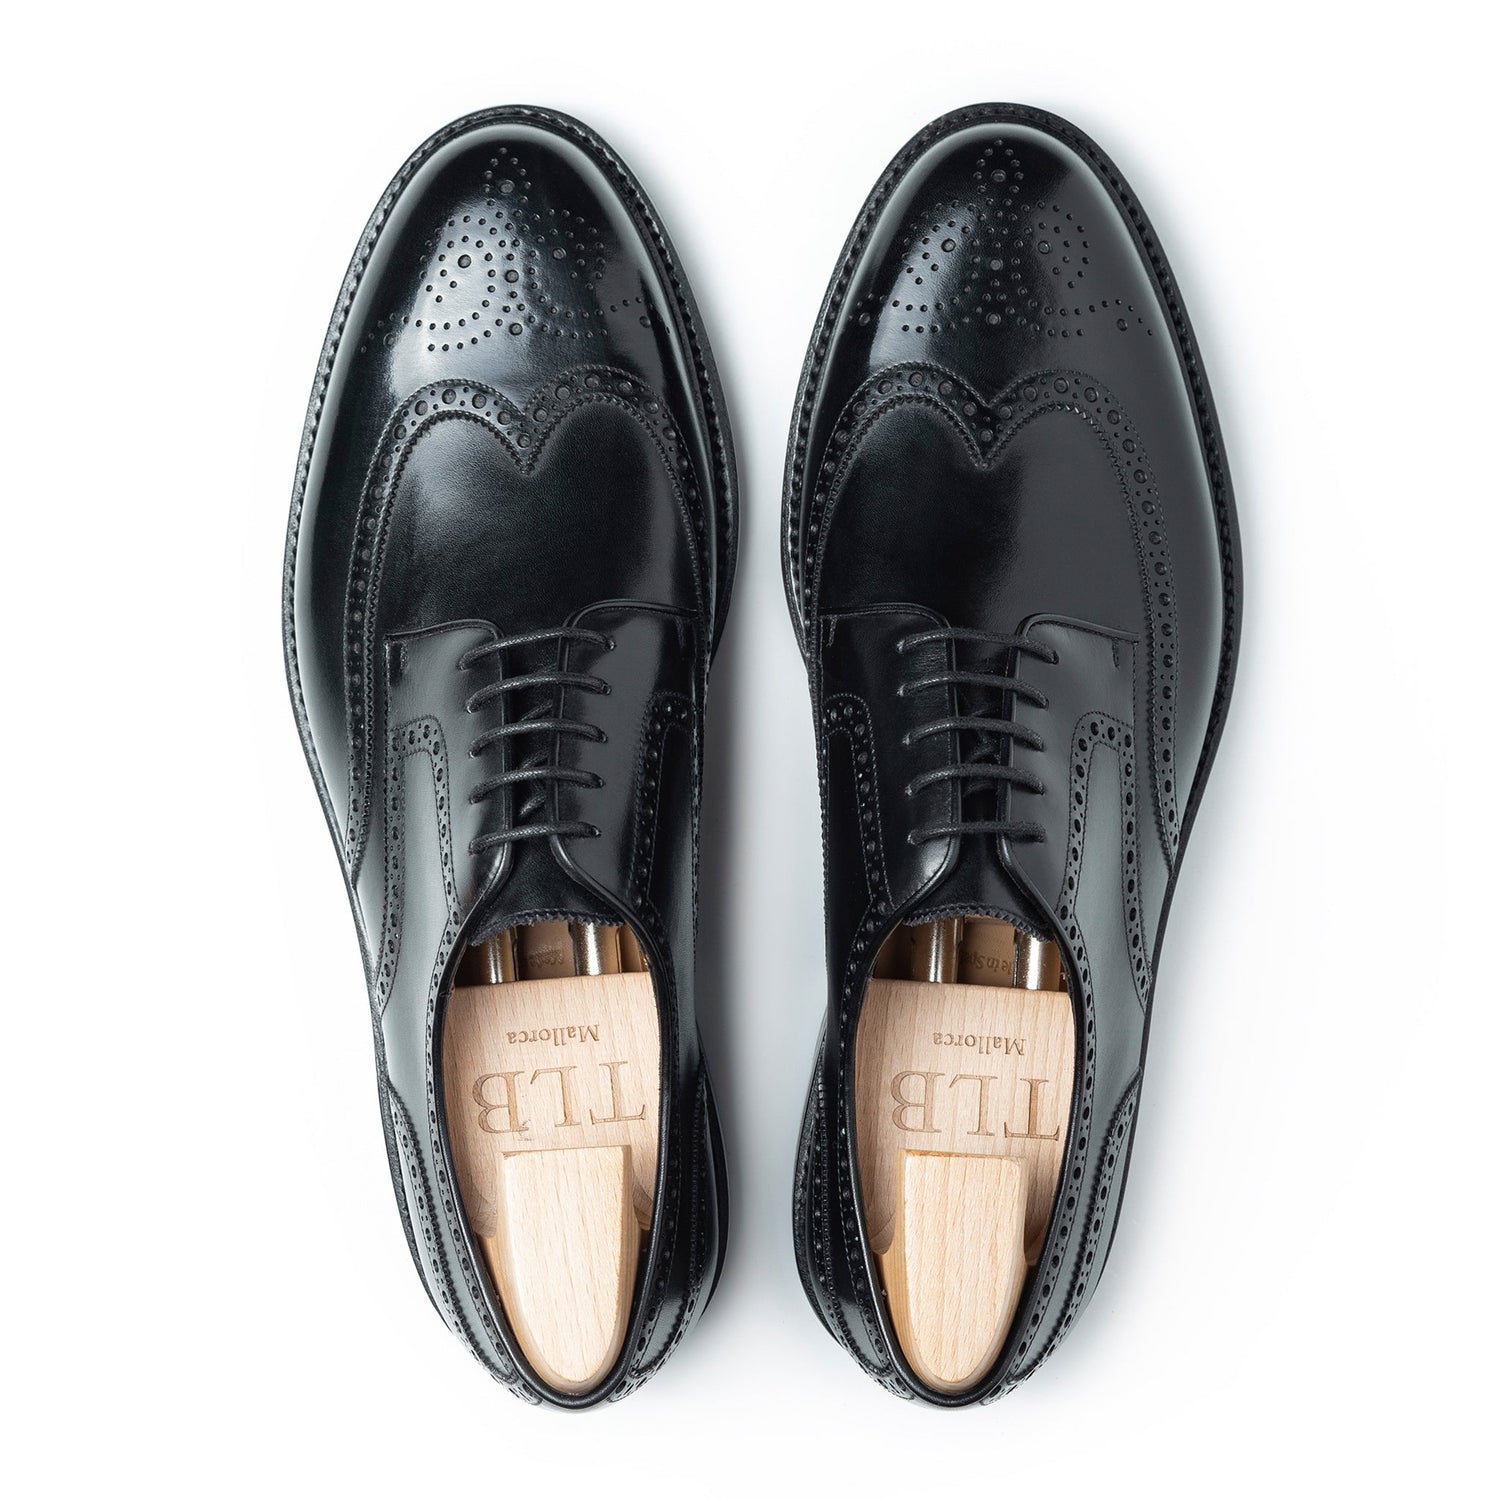 TLB Mallorca leather shoes - Men's derby shoes